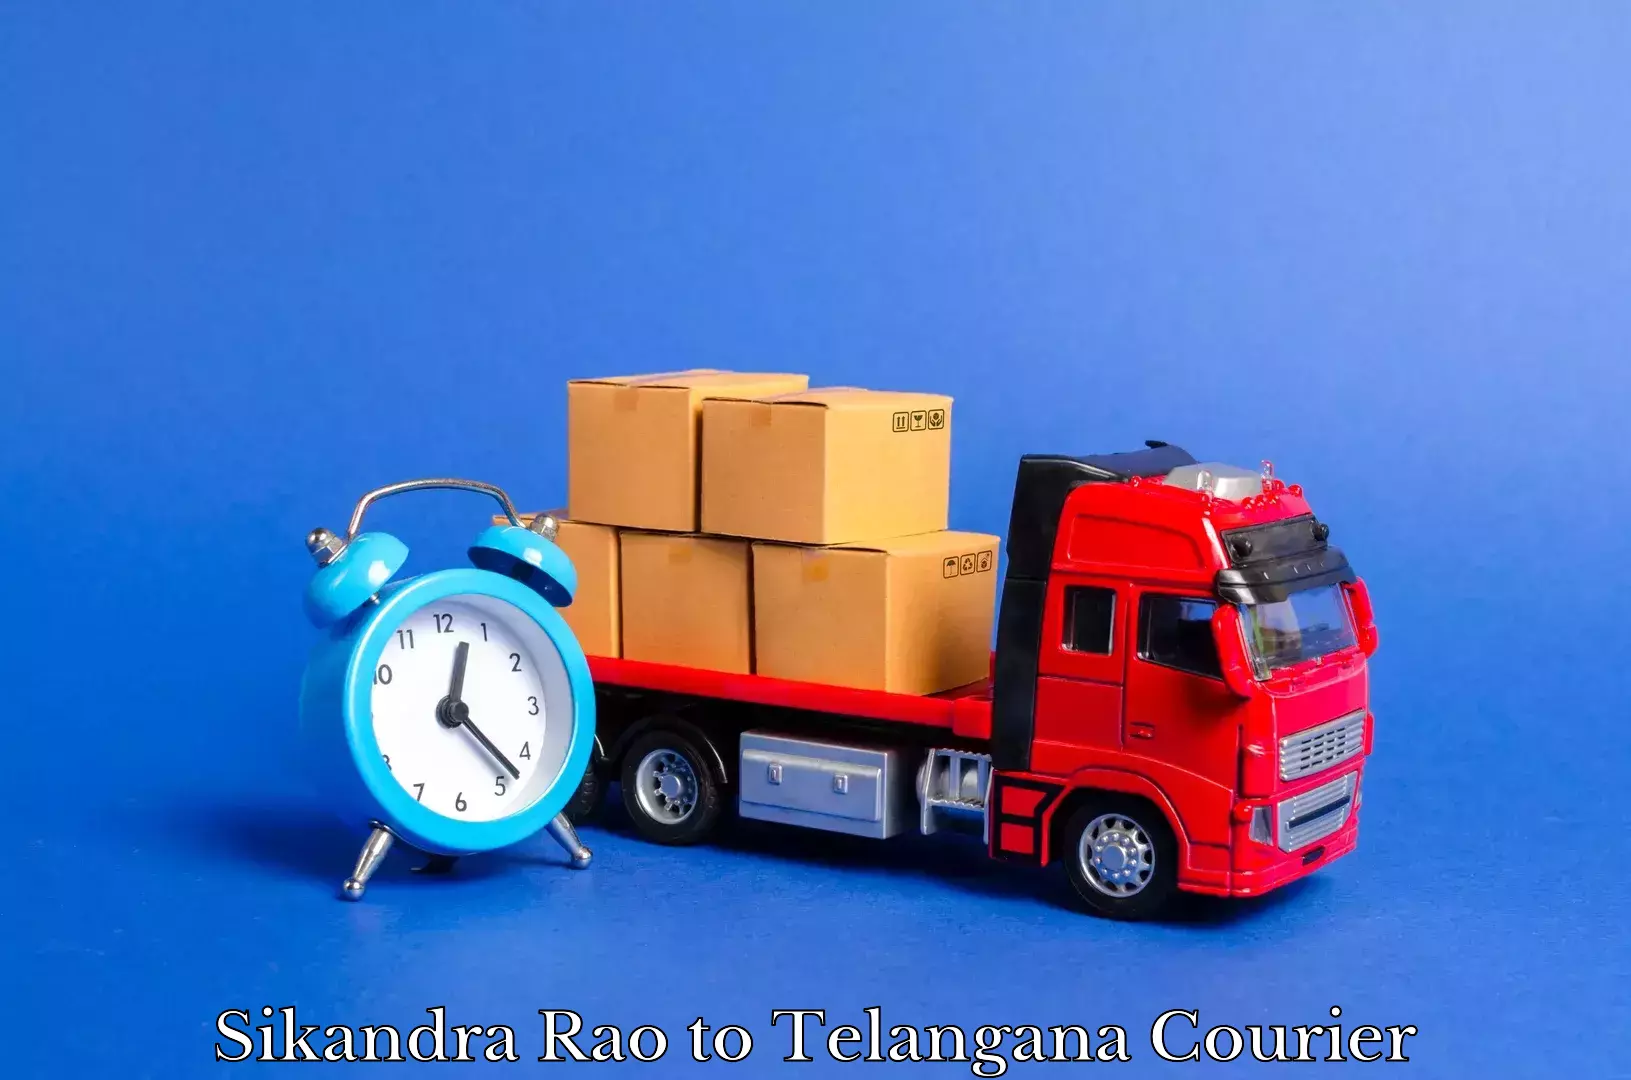 Professional movers and packers Sikandra Rao to Nereducharla